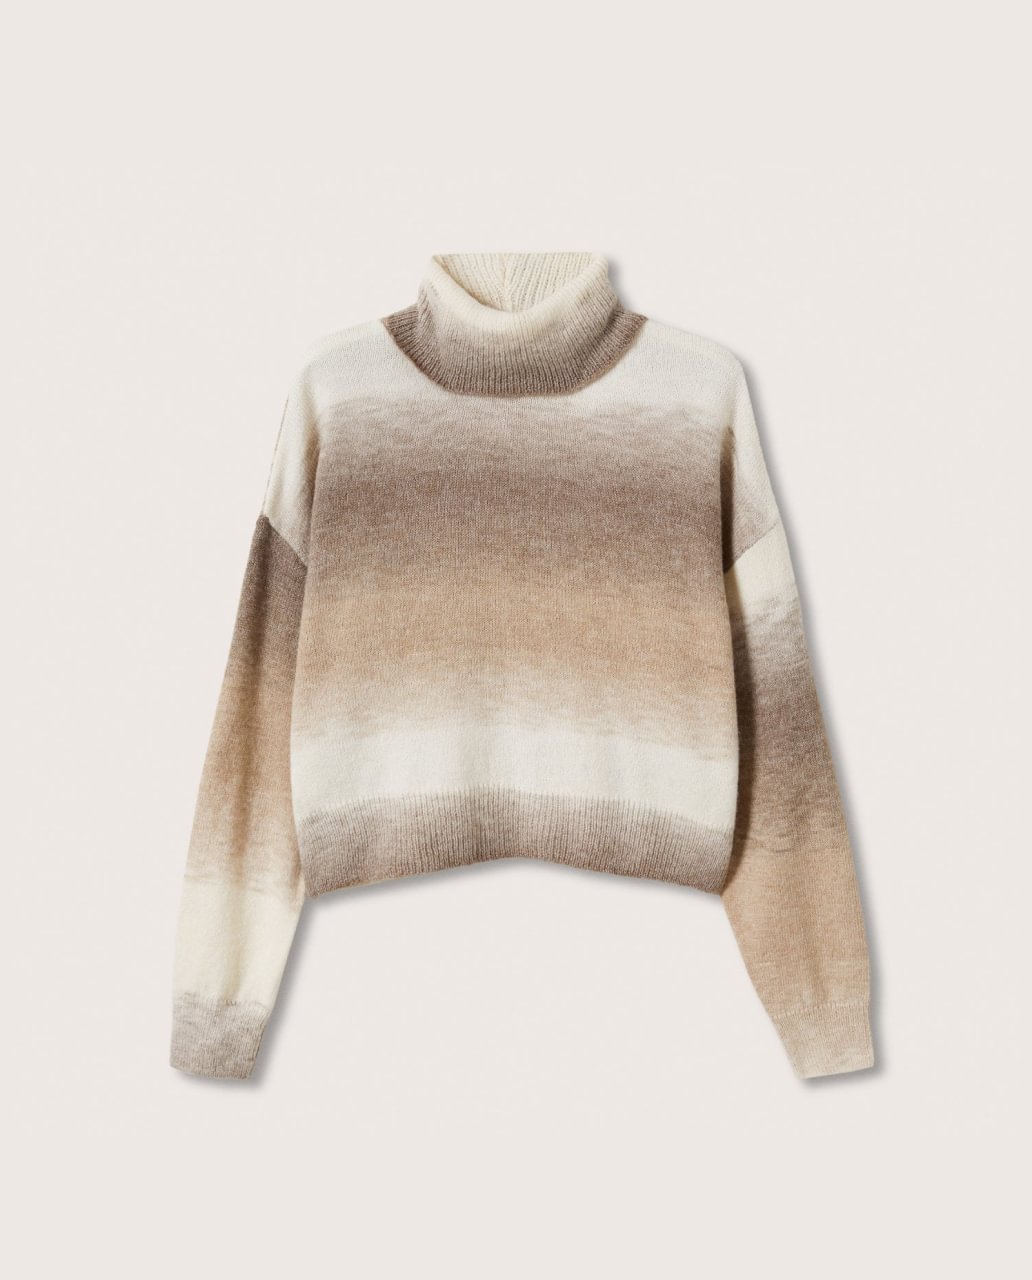 Bicolour knit sweater